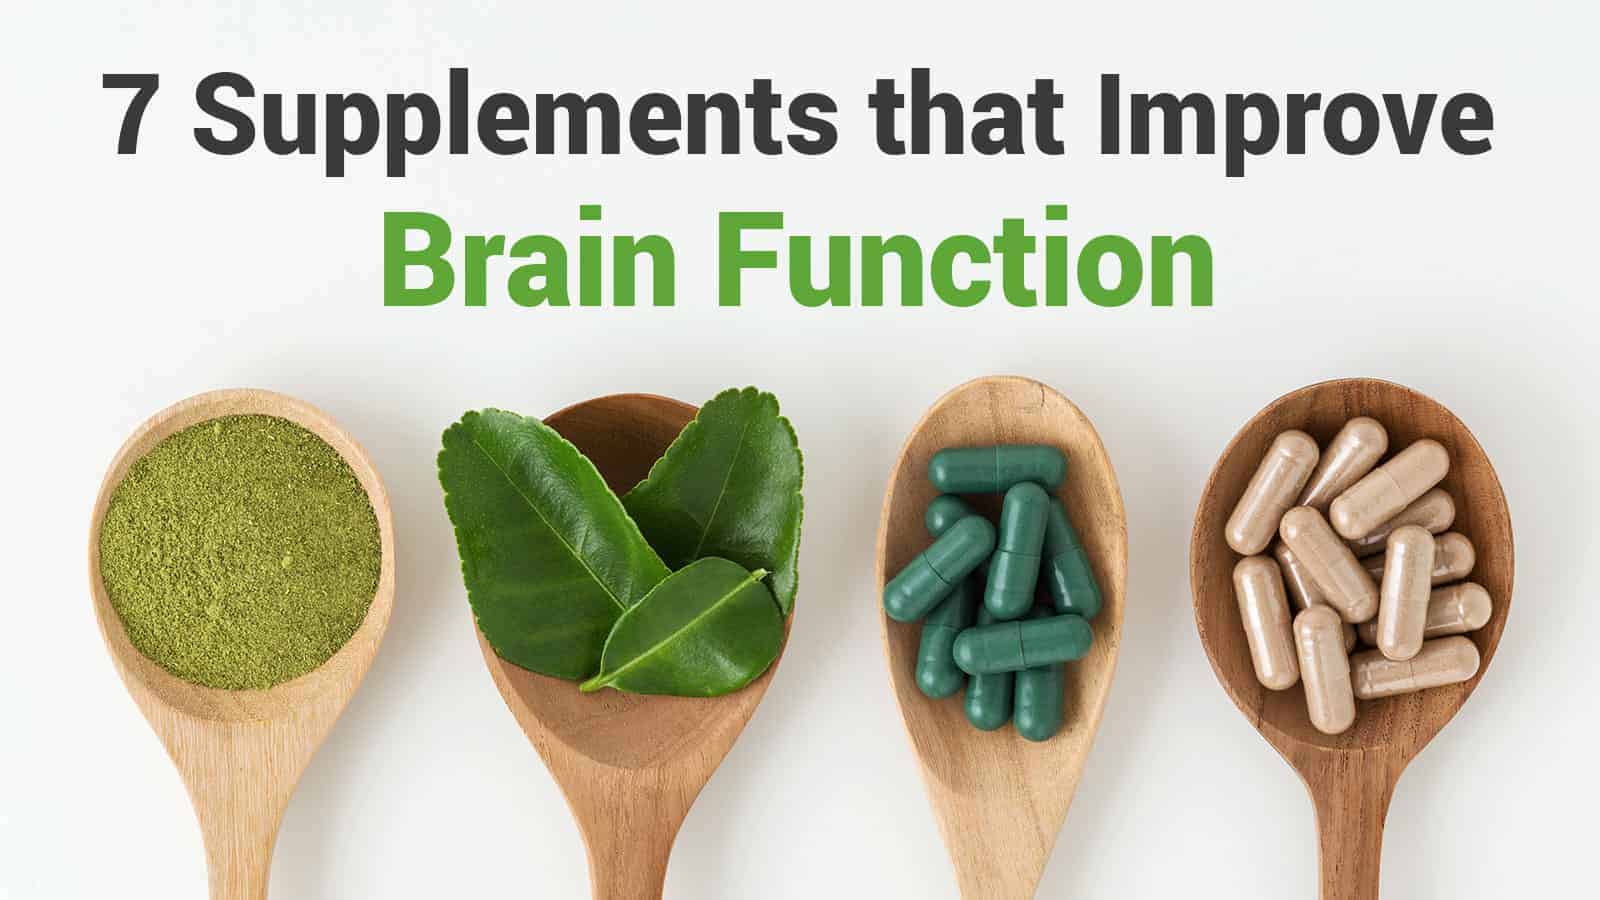 7 Supplements that Improve Brain Function